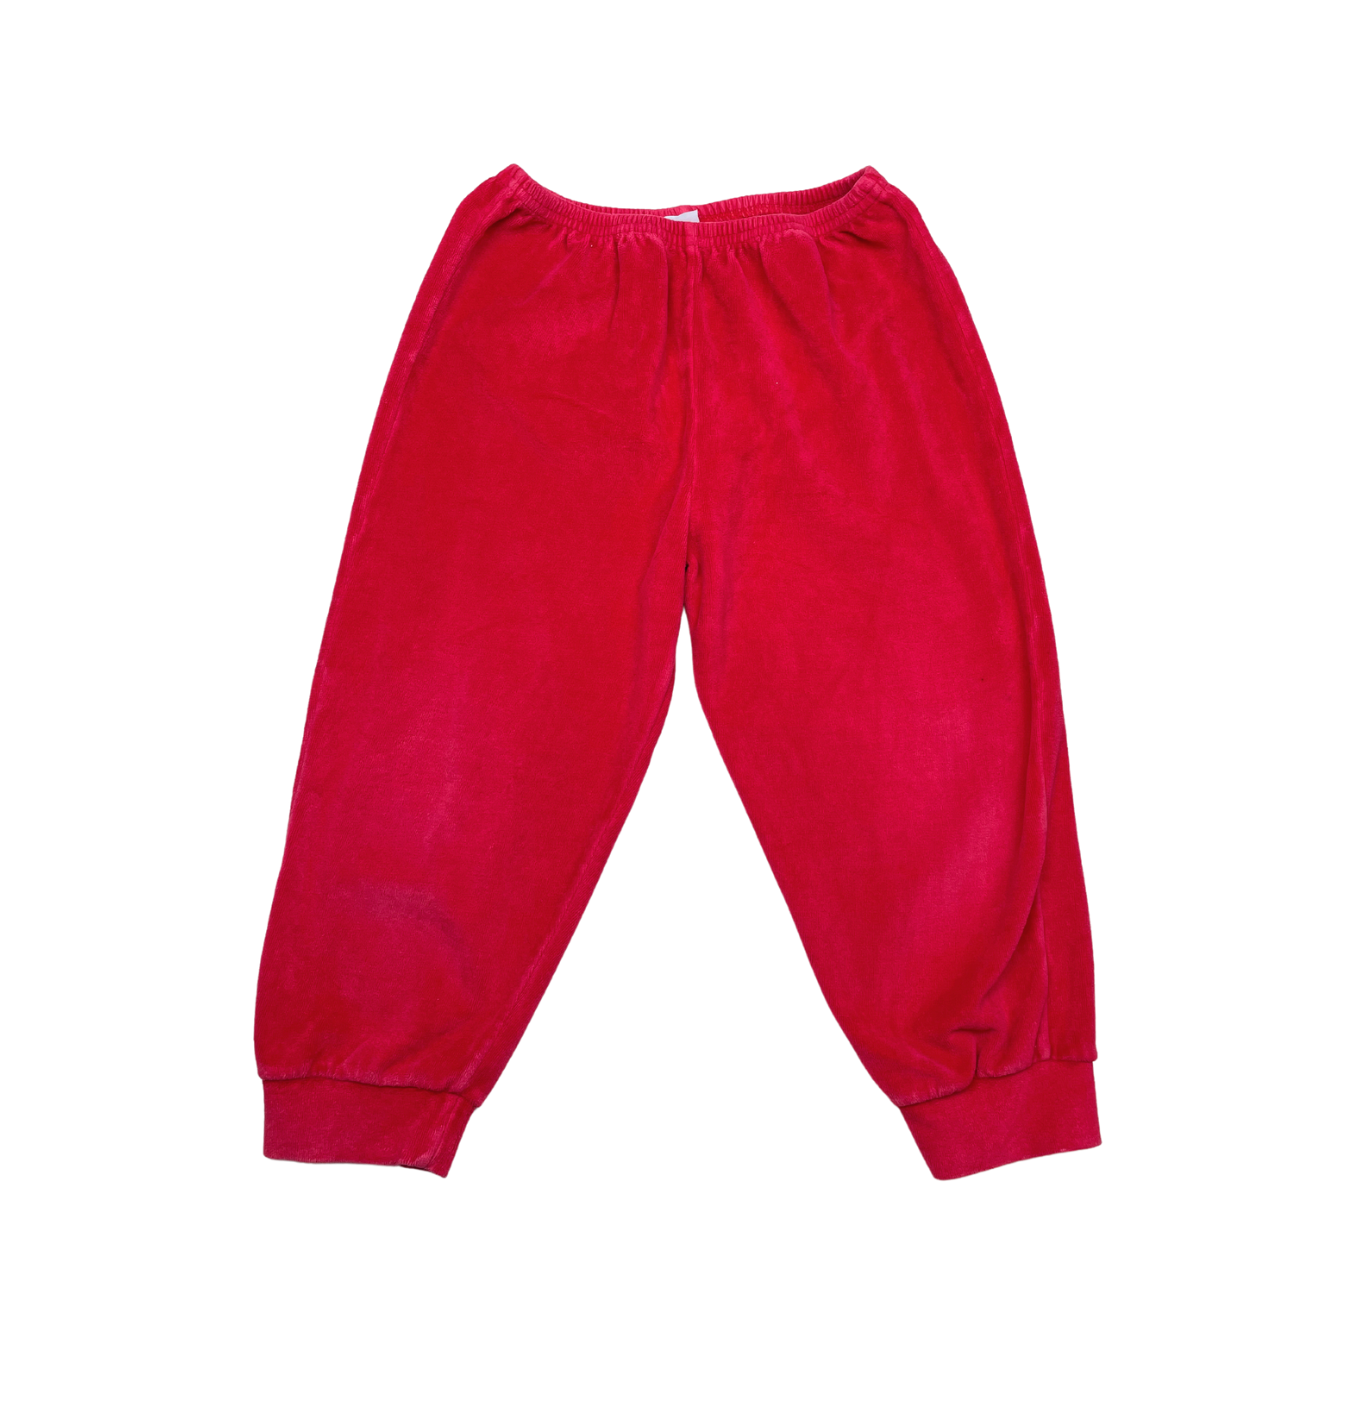 VINTAGE - Pyjama en velour rouge et jaune Babar - 3 ans